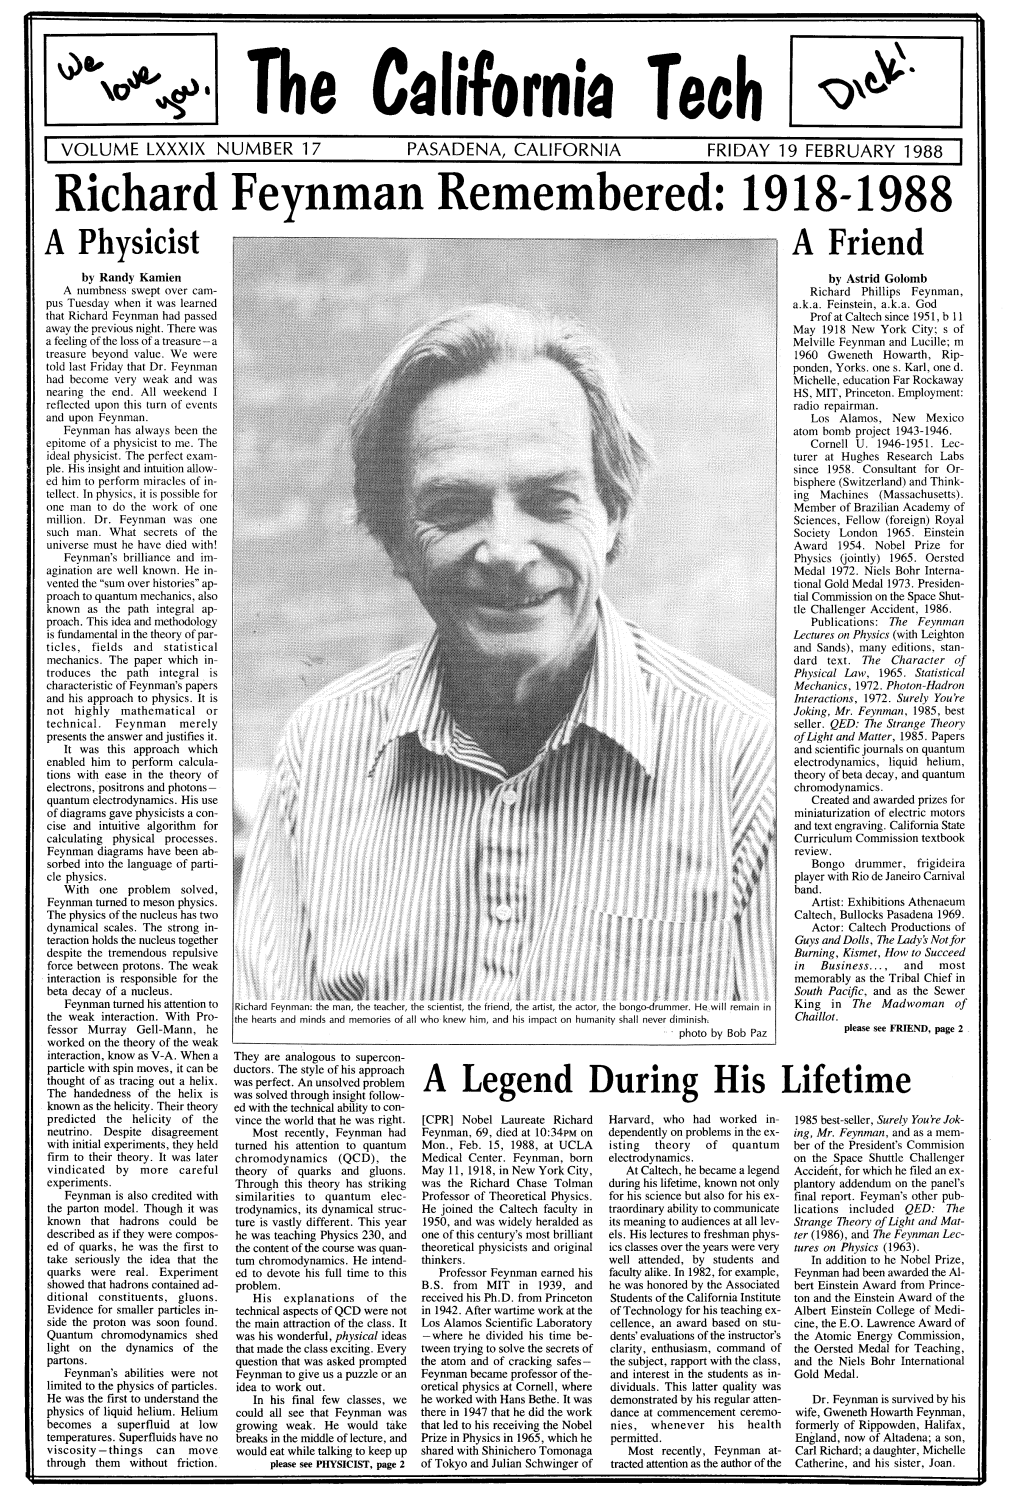 Richard Feynman Remembered: 1918-1988